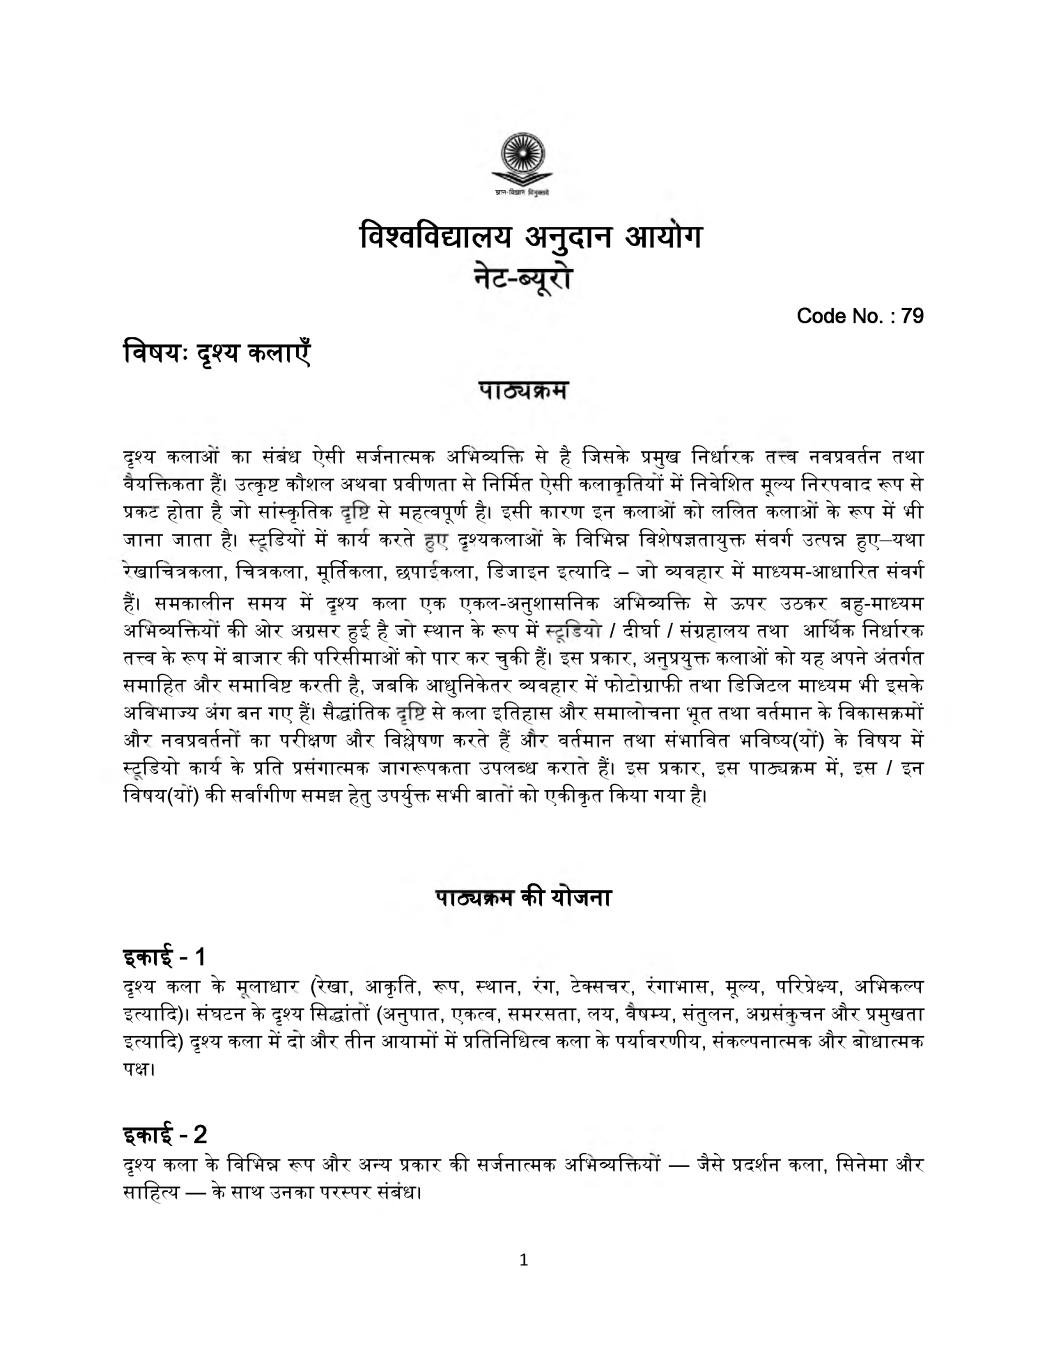 UGC NET Syllabus for Visual Art 2020 in Hindi - Page 1